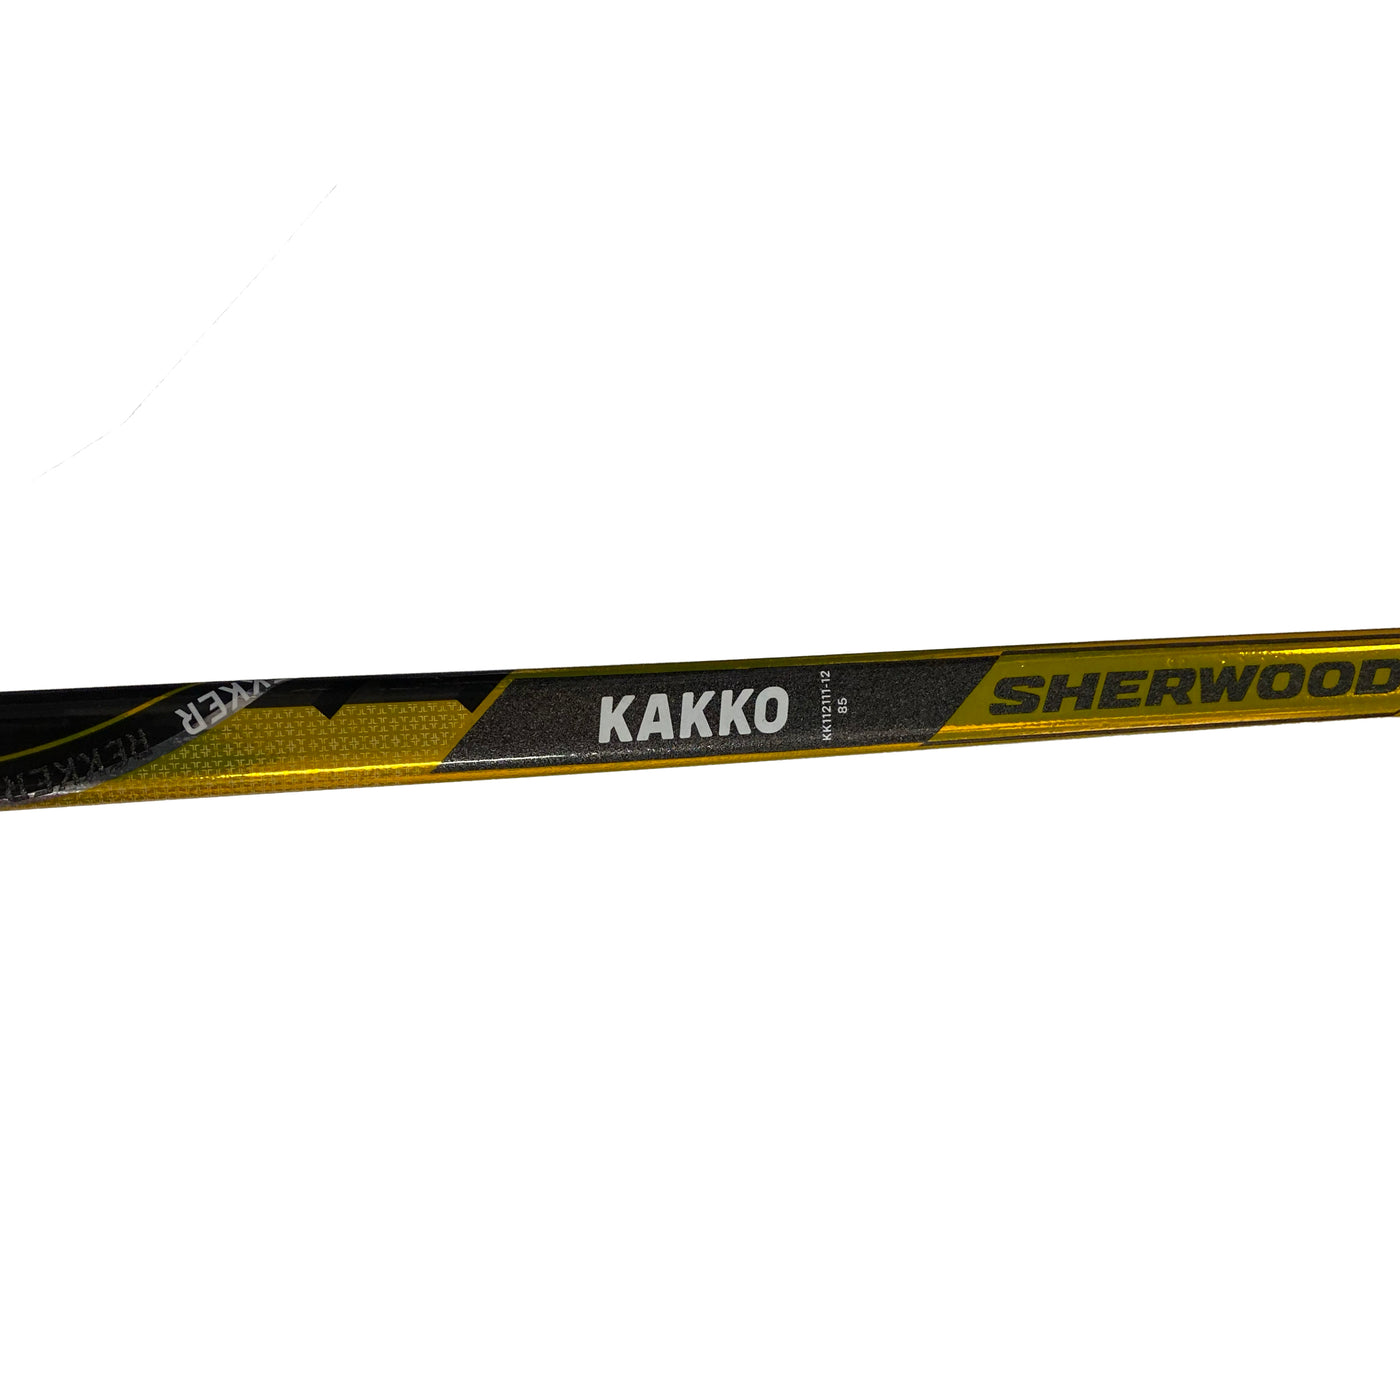 Sherwood Rekker Element One - Kaapo Kakko - Pro Stock Stick - New York Rangers